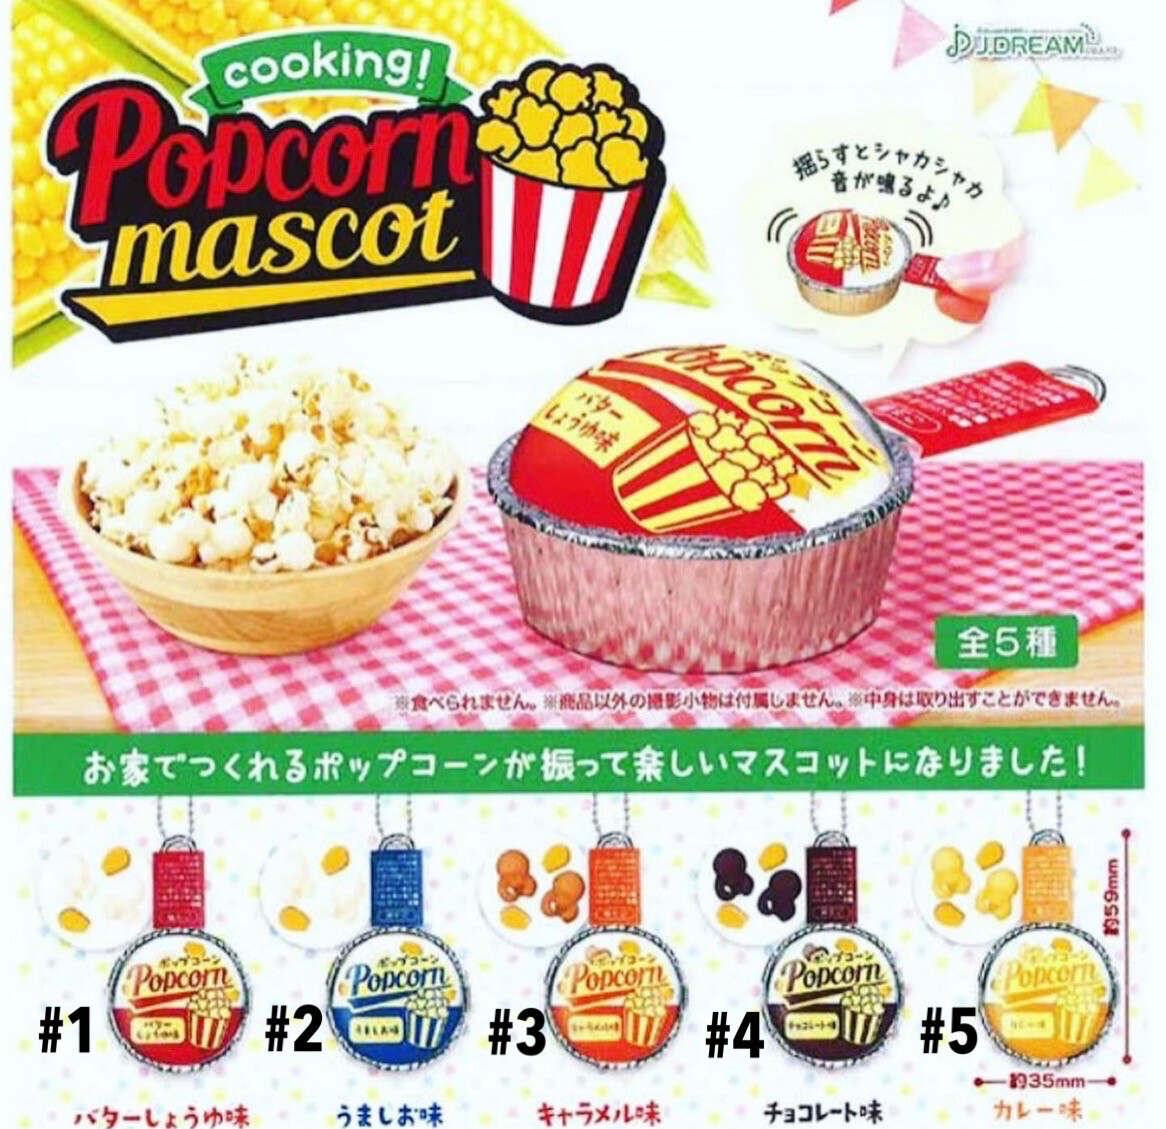 J. Dream Popcorn Shakashaka Mascot Gashapon